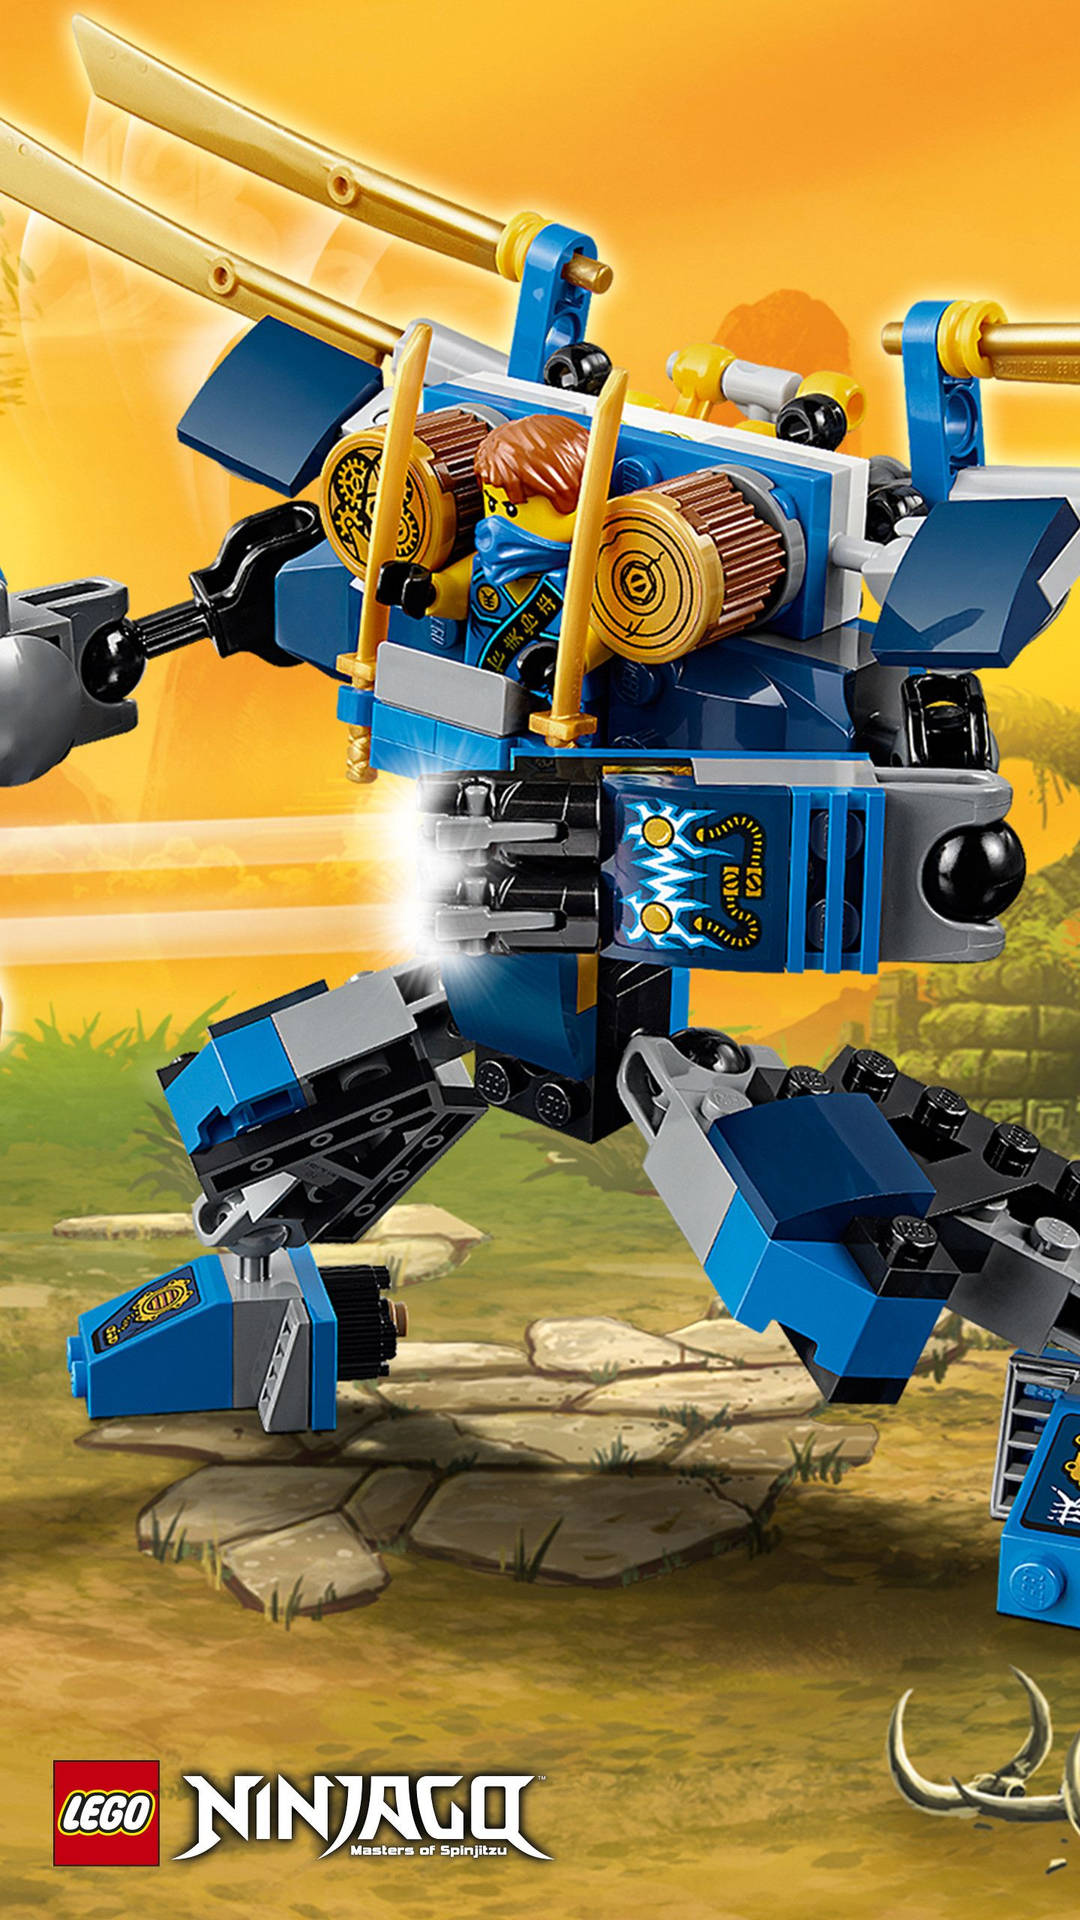 Download Lego Ninjago Jay's Blue Robot Wallpaper